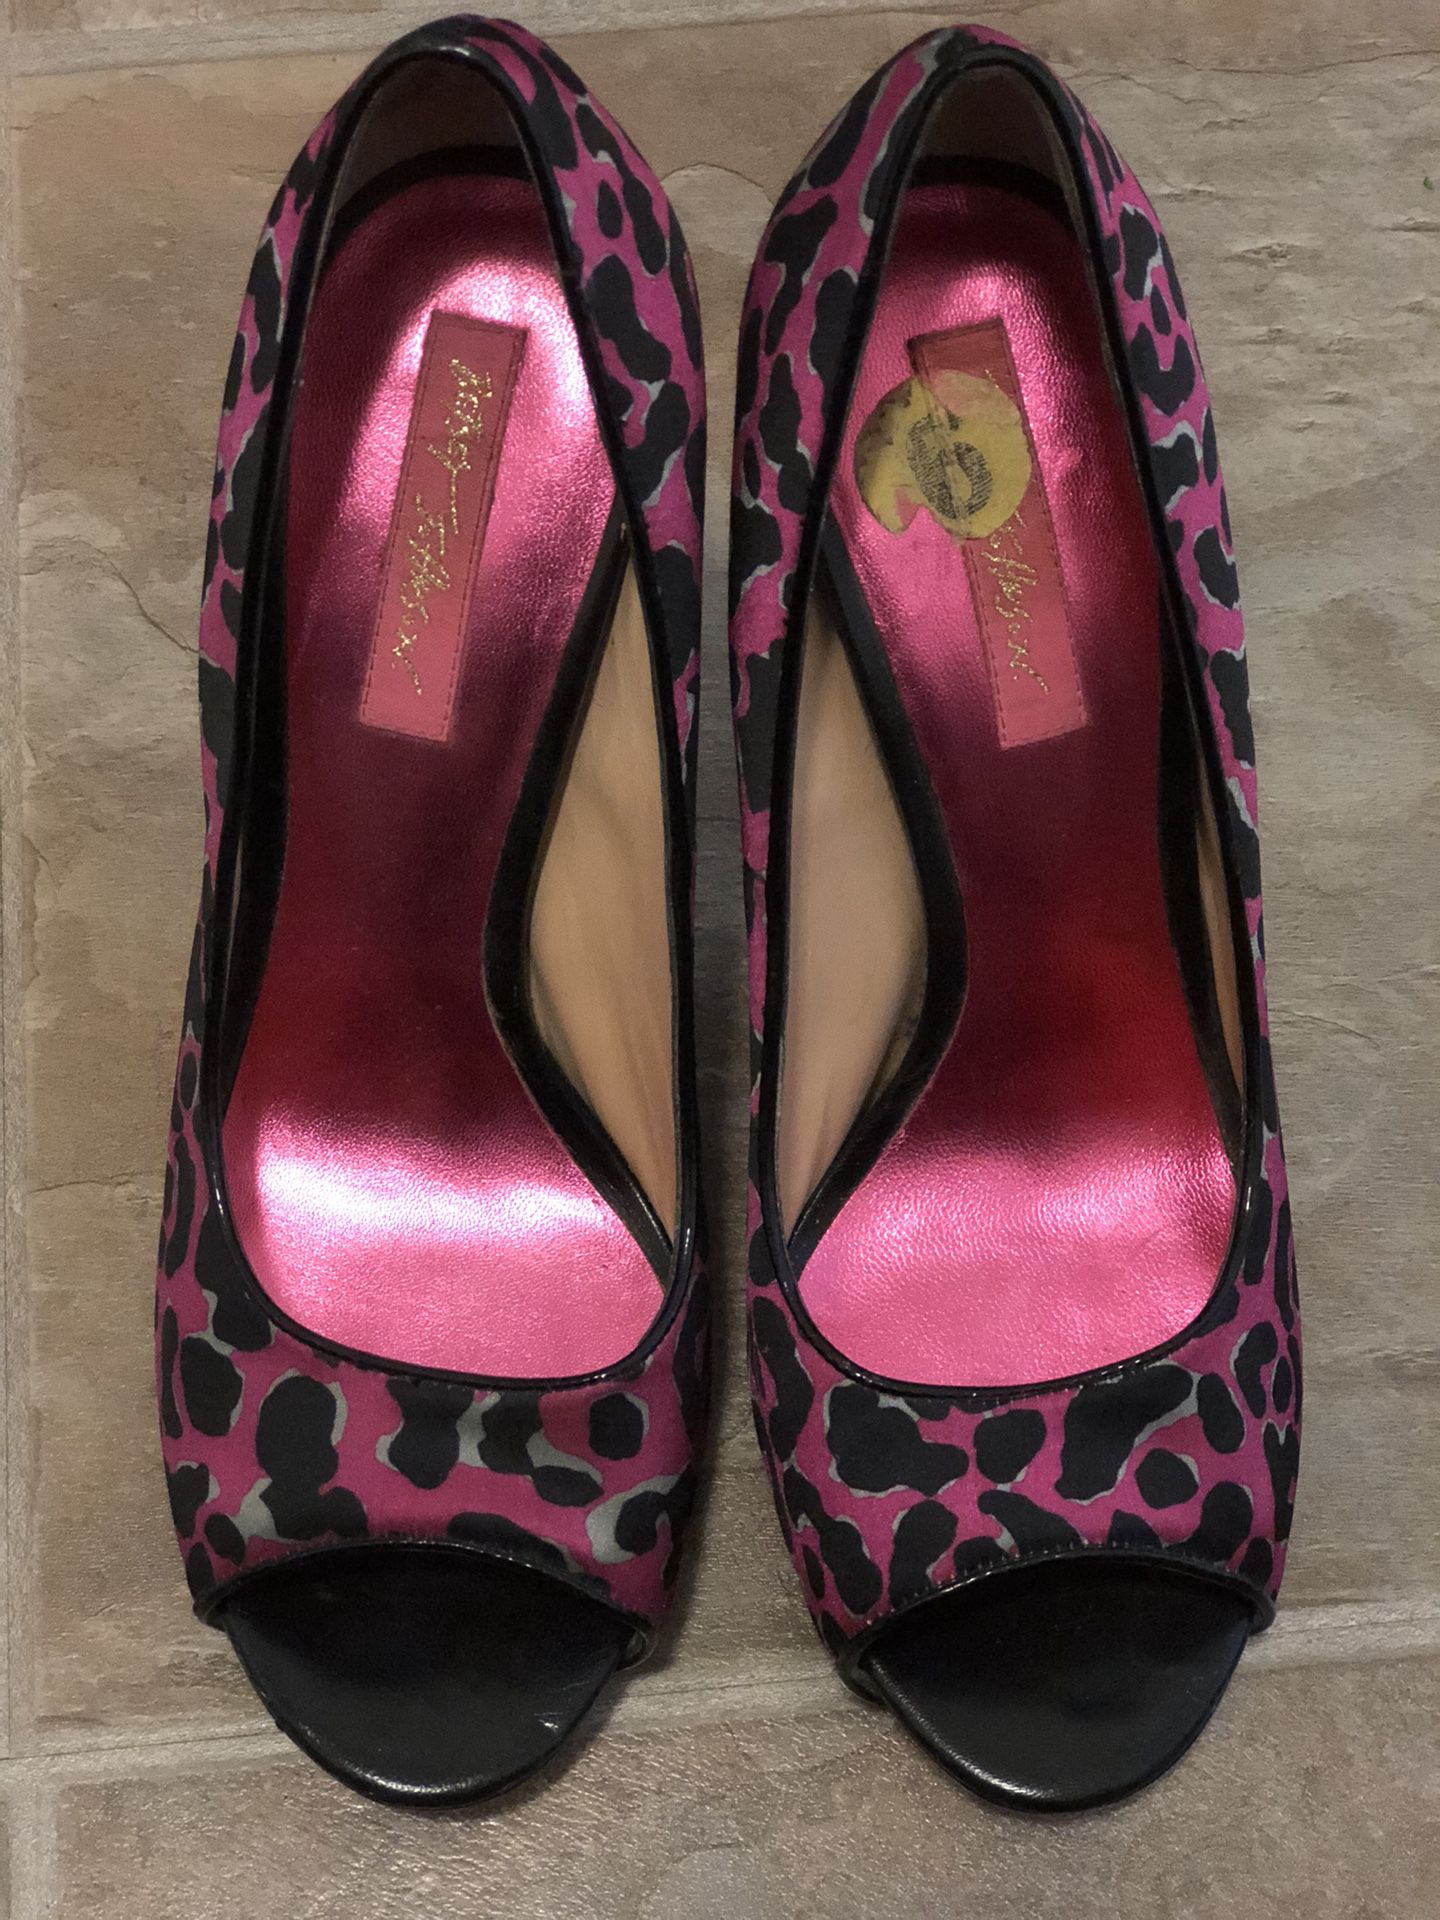 Betsy Johnson Pink Black Leopard Print Heels Size 9